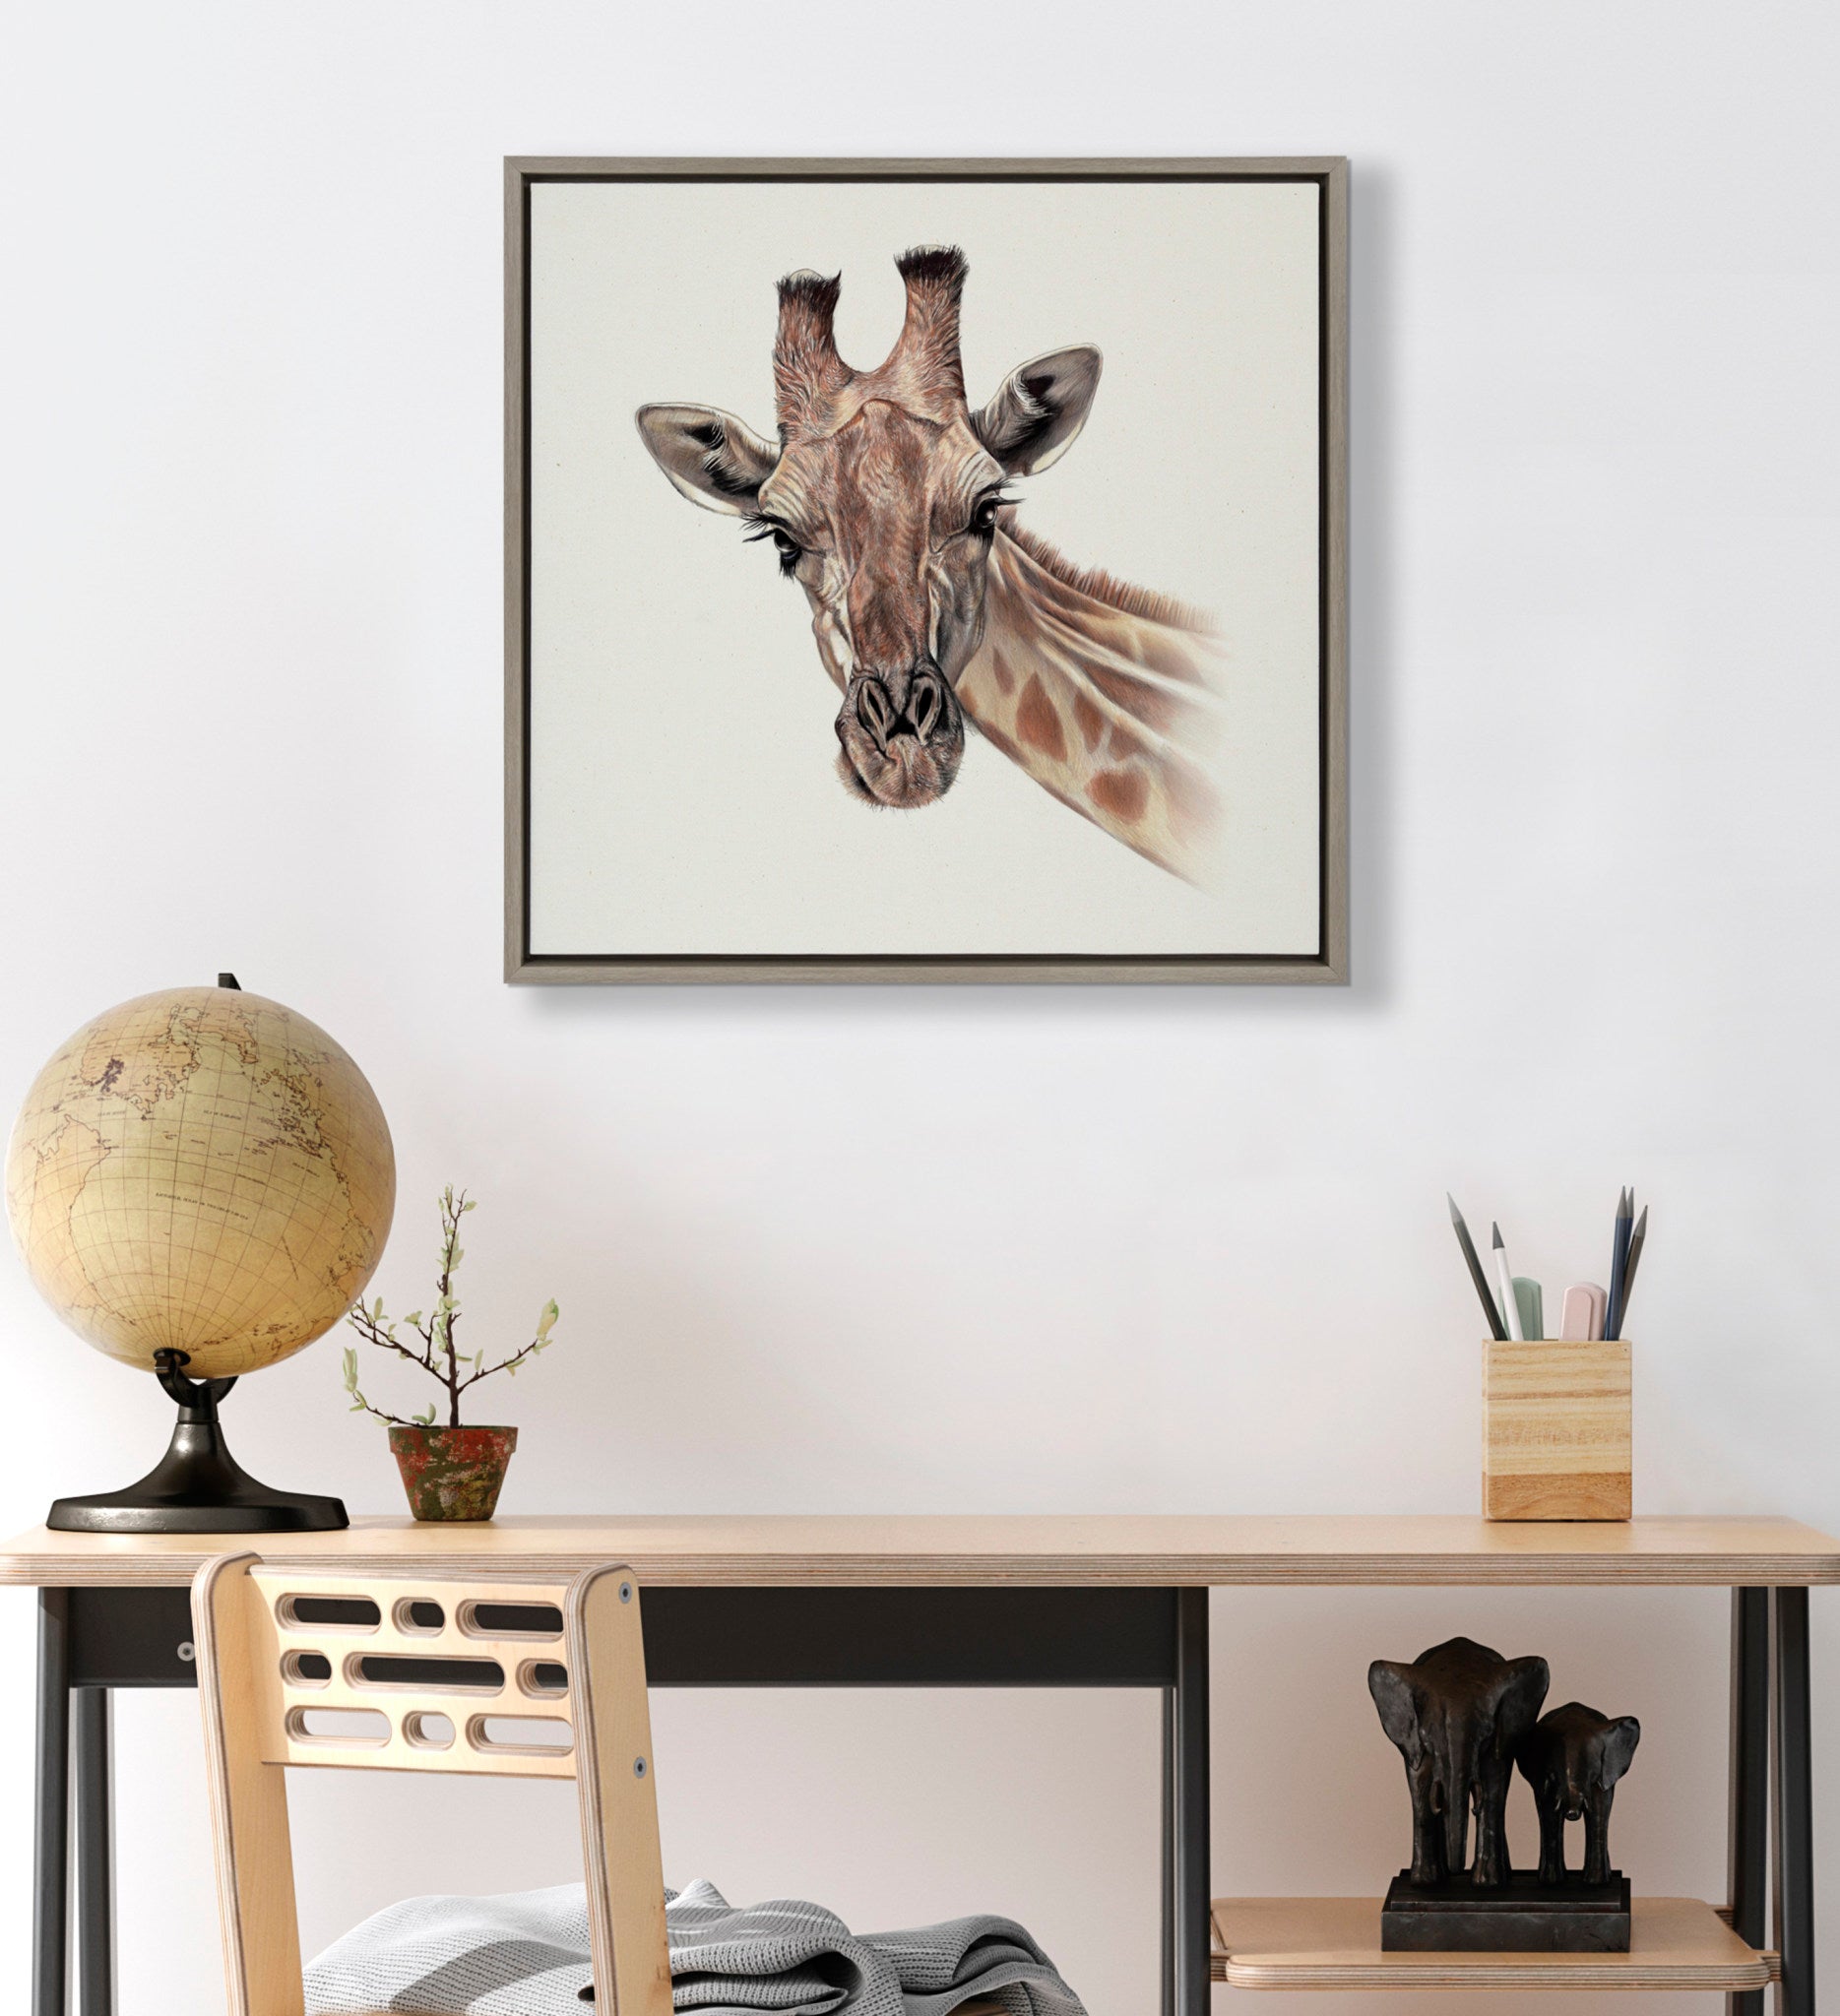 Sylvie Giraffe Framed Canvas by Ron Dunn, Gray 22x22